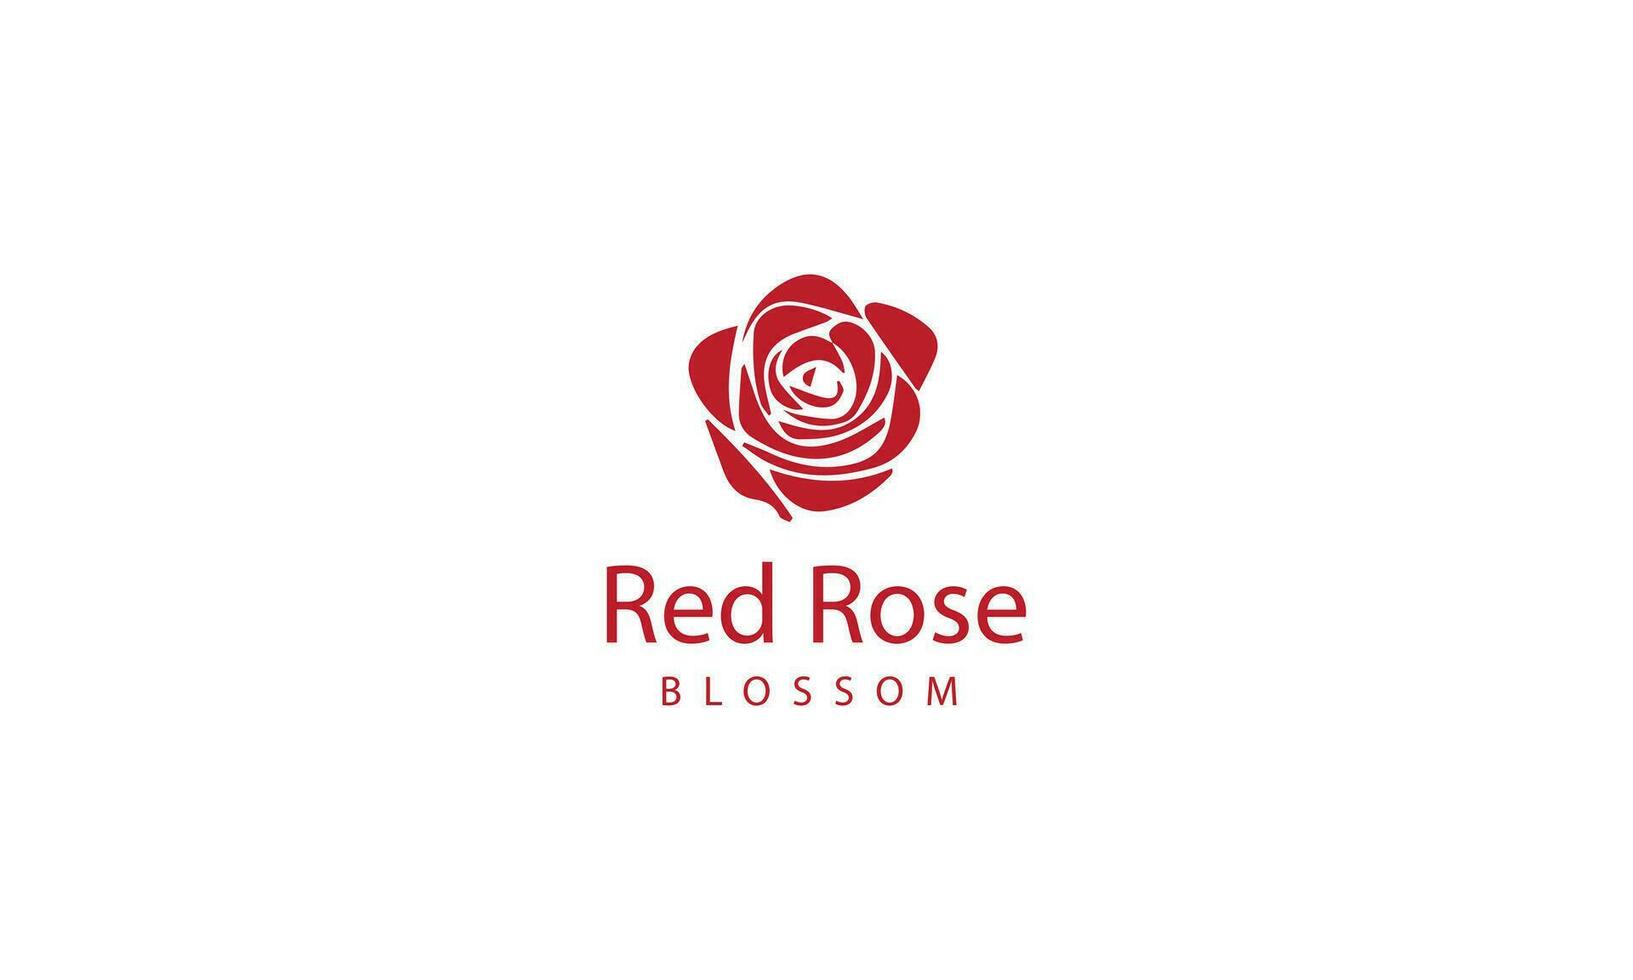 Red Rose logo design vector